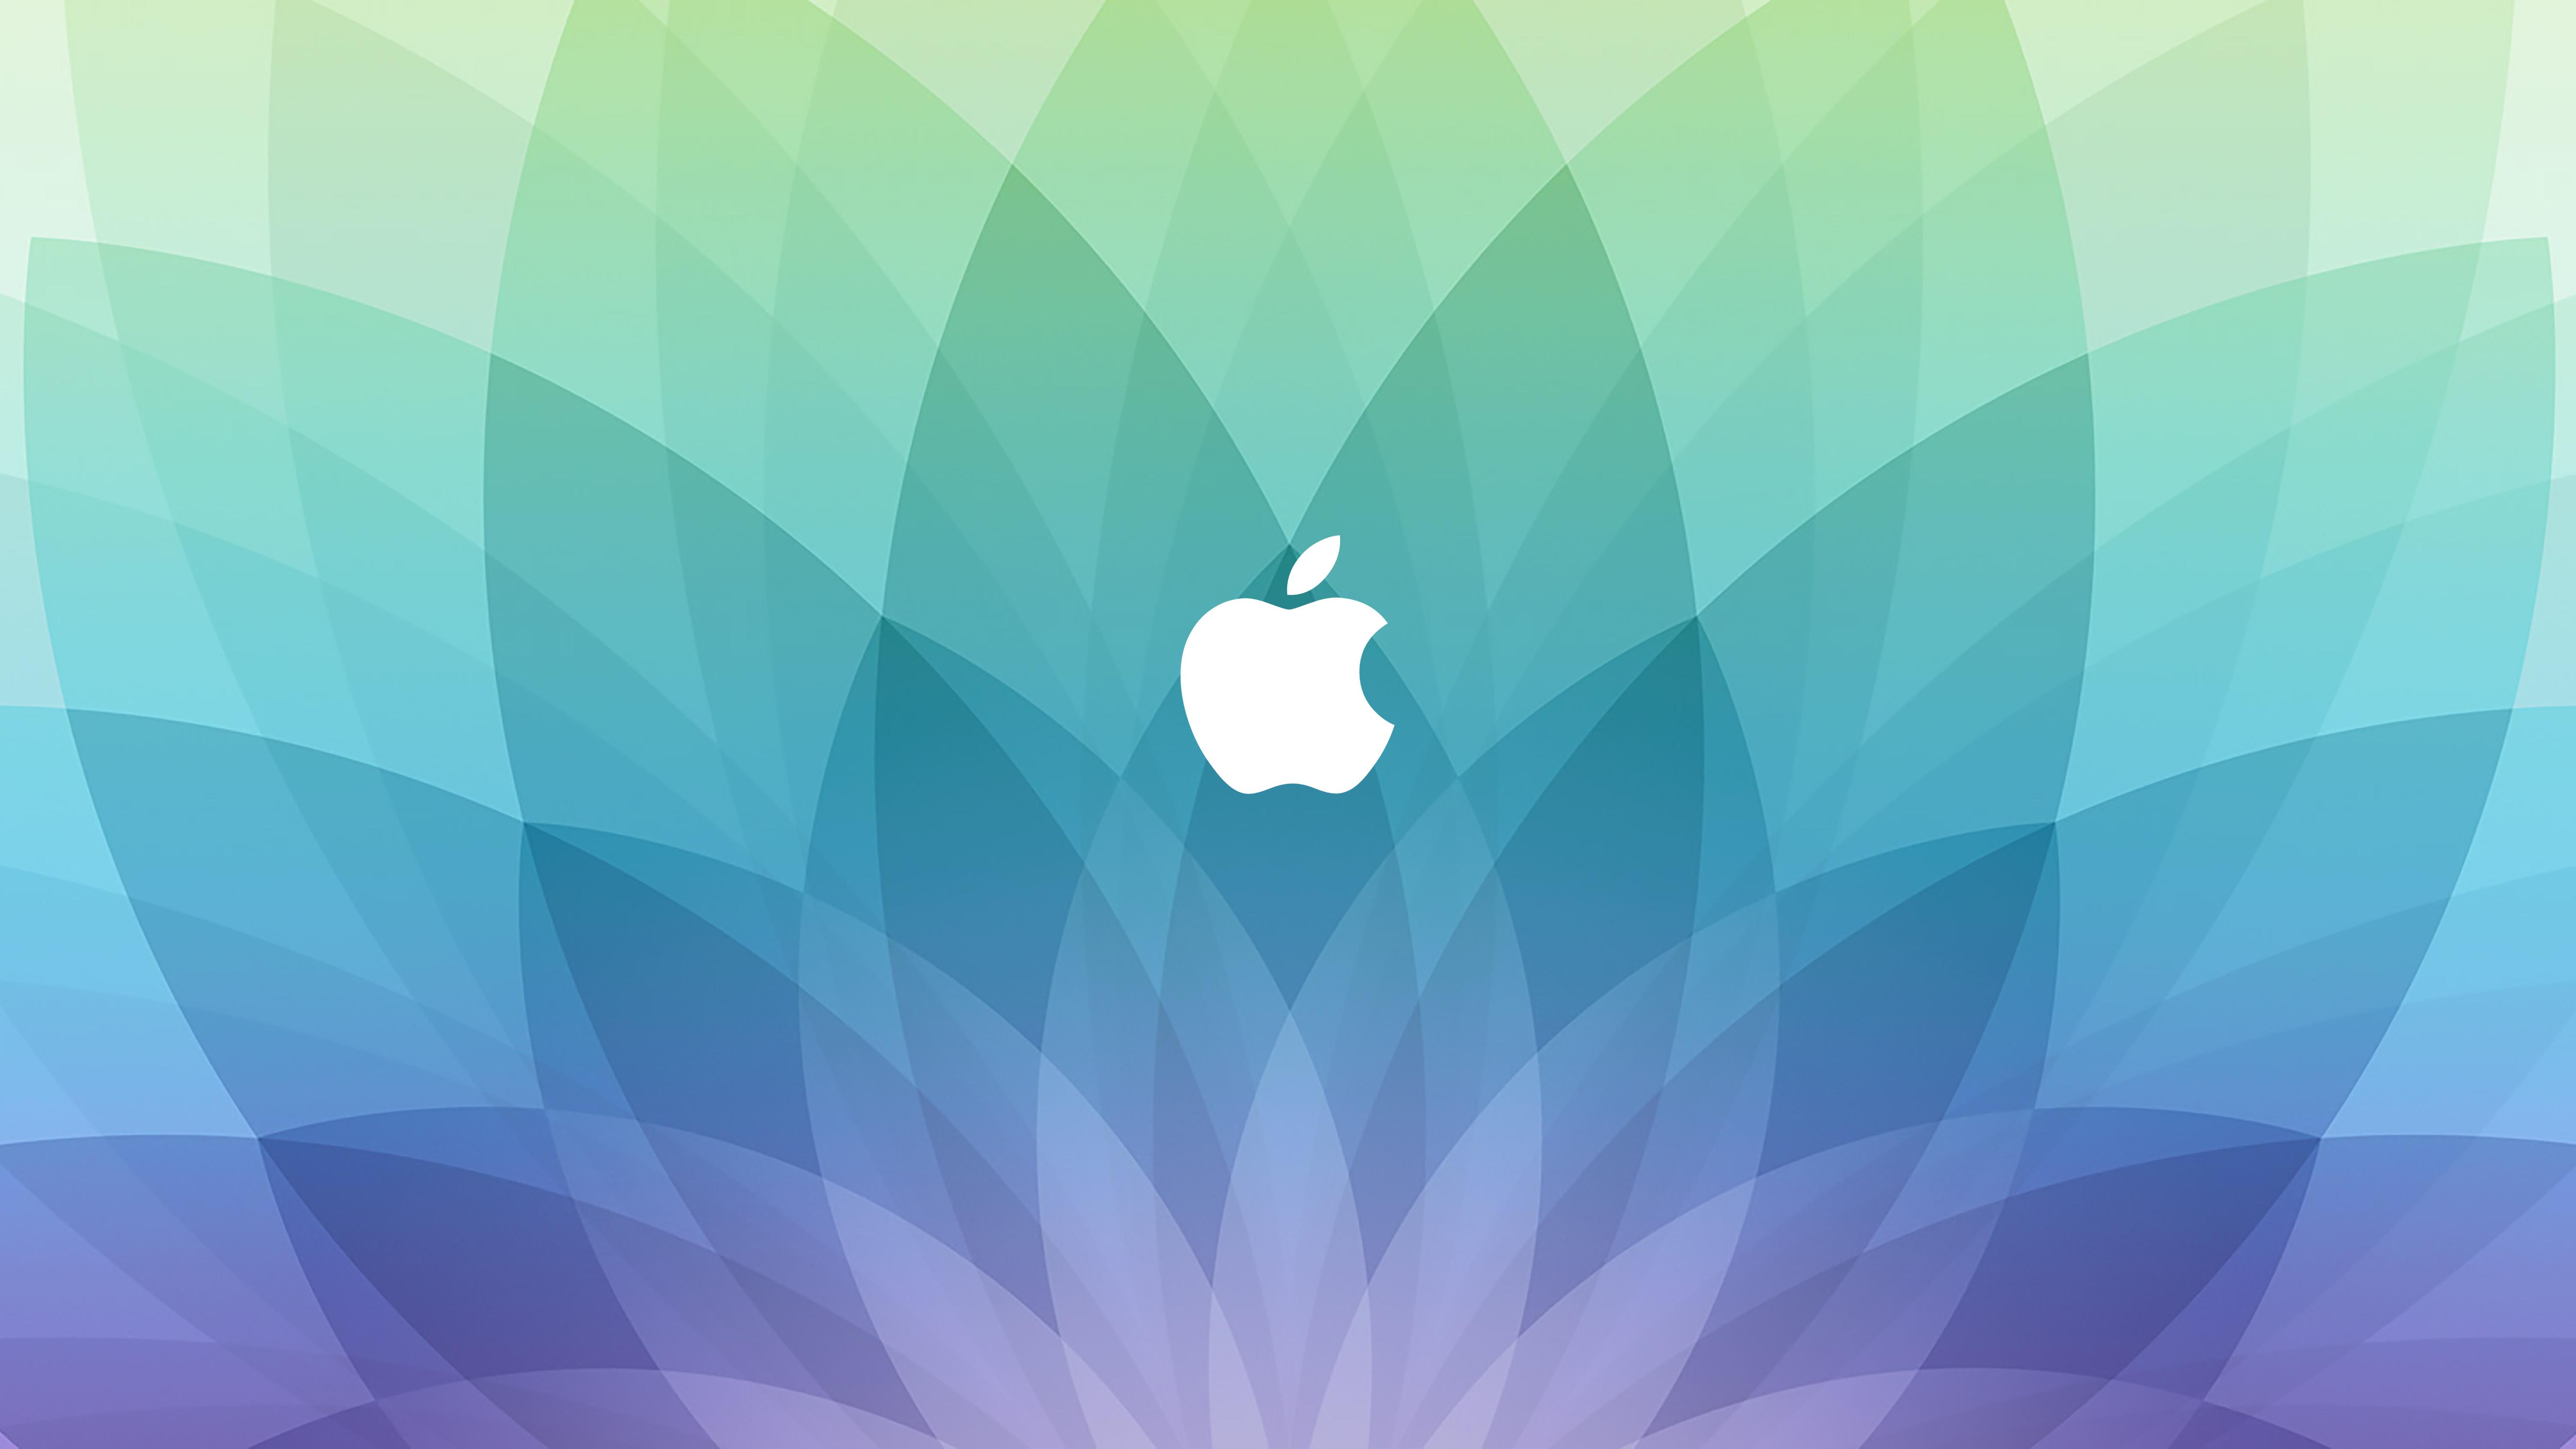 Apple Wallpaper | Free High Definition Wallpaper